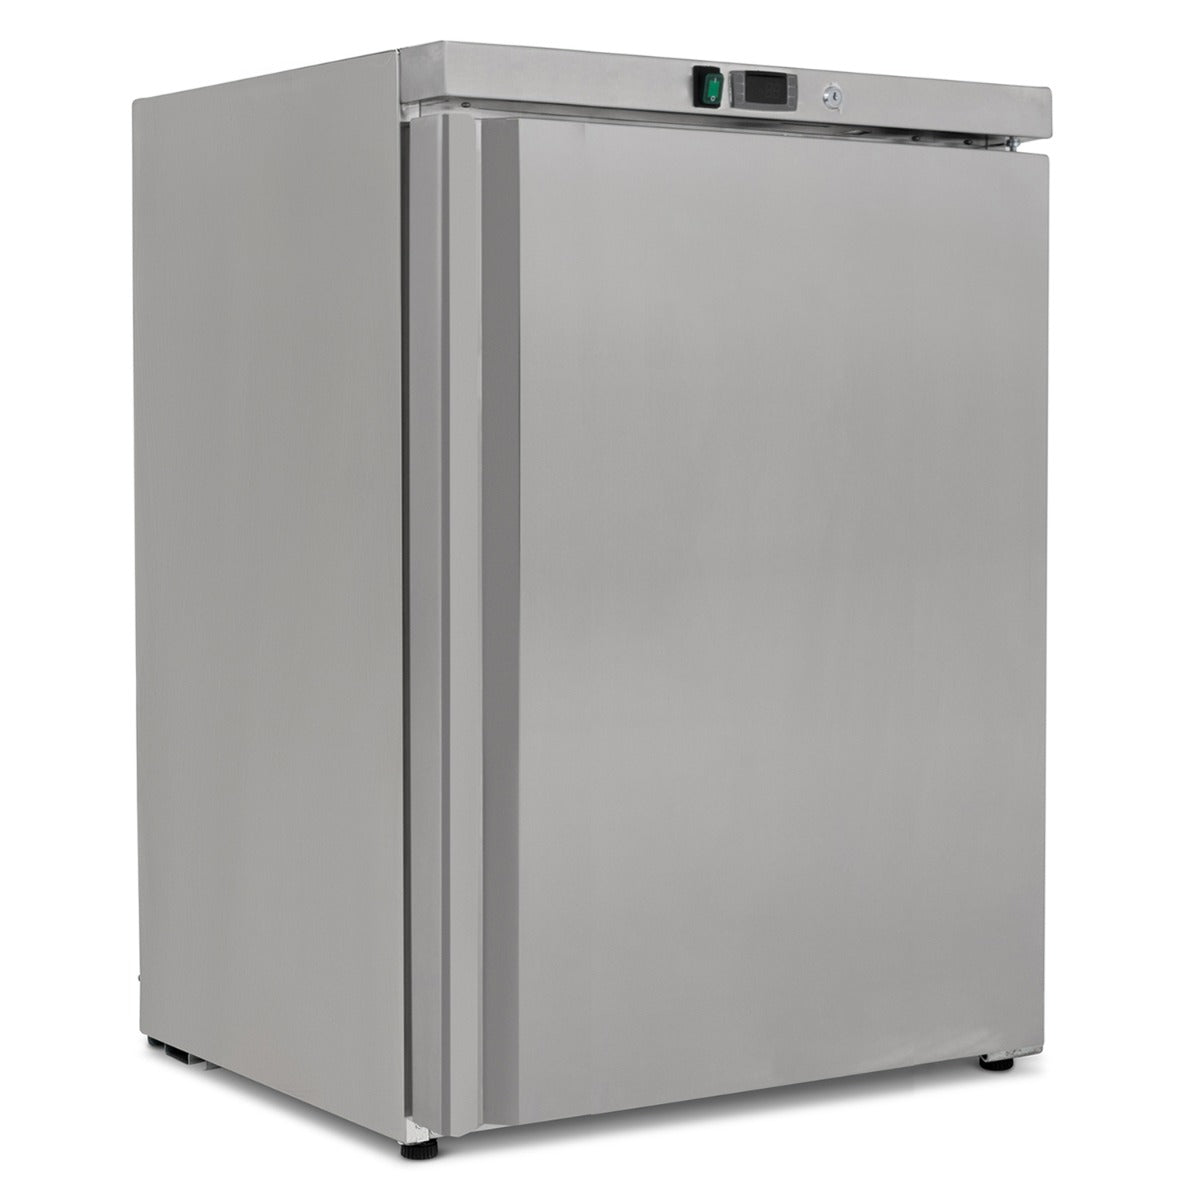 Koldbox 200L Stainless Steel Under Counter Refrigerator